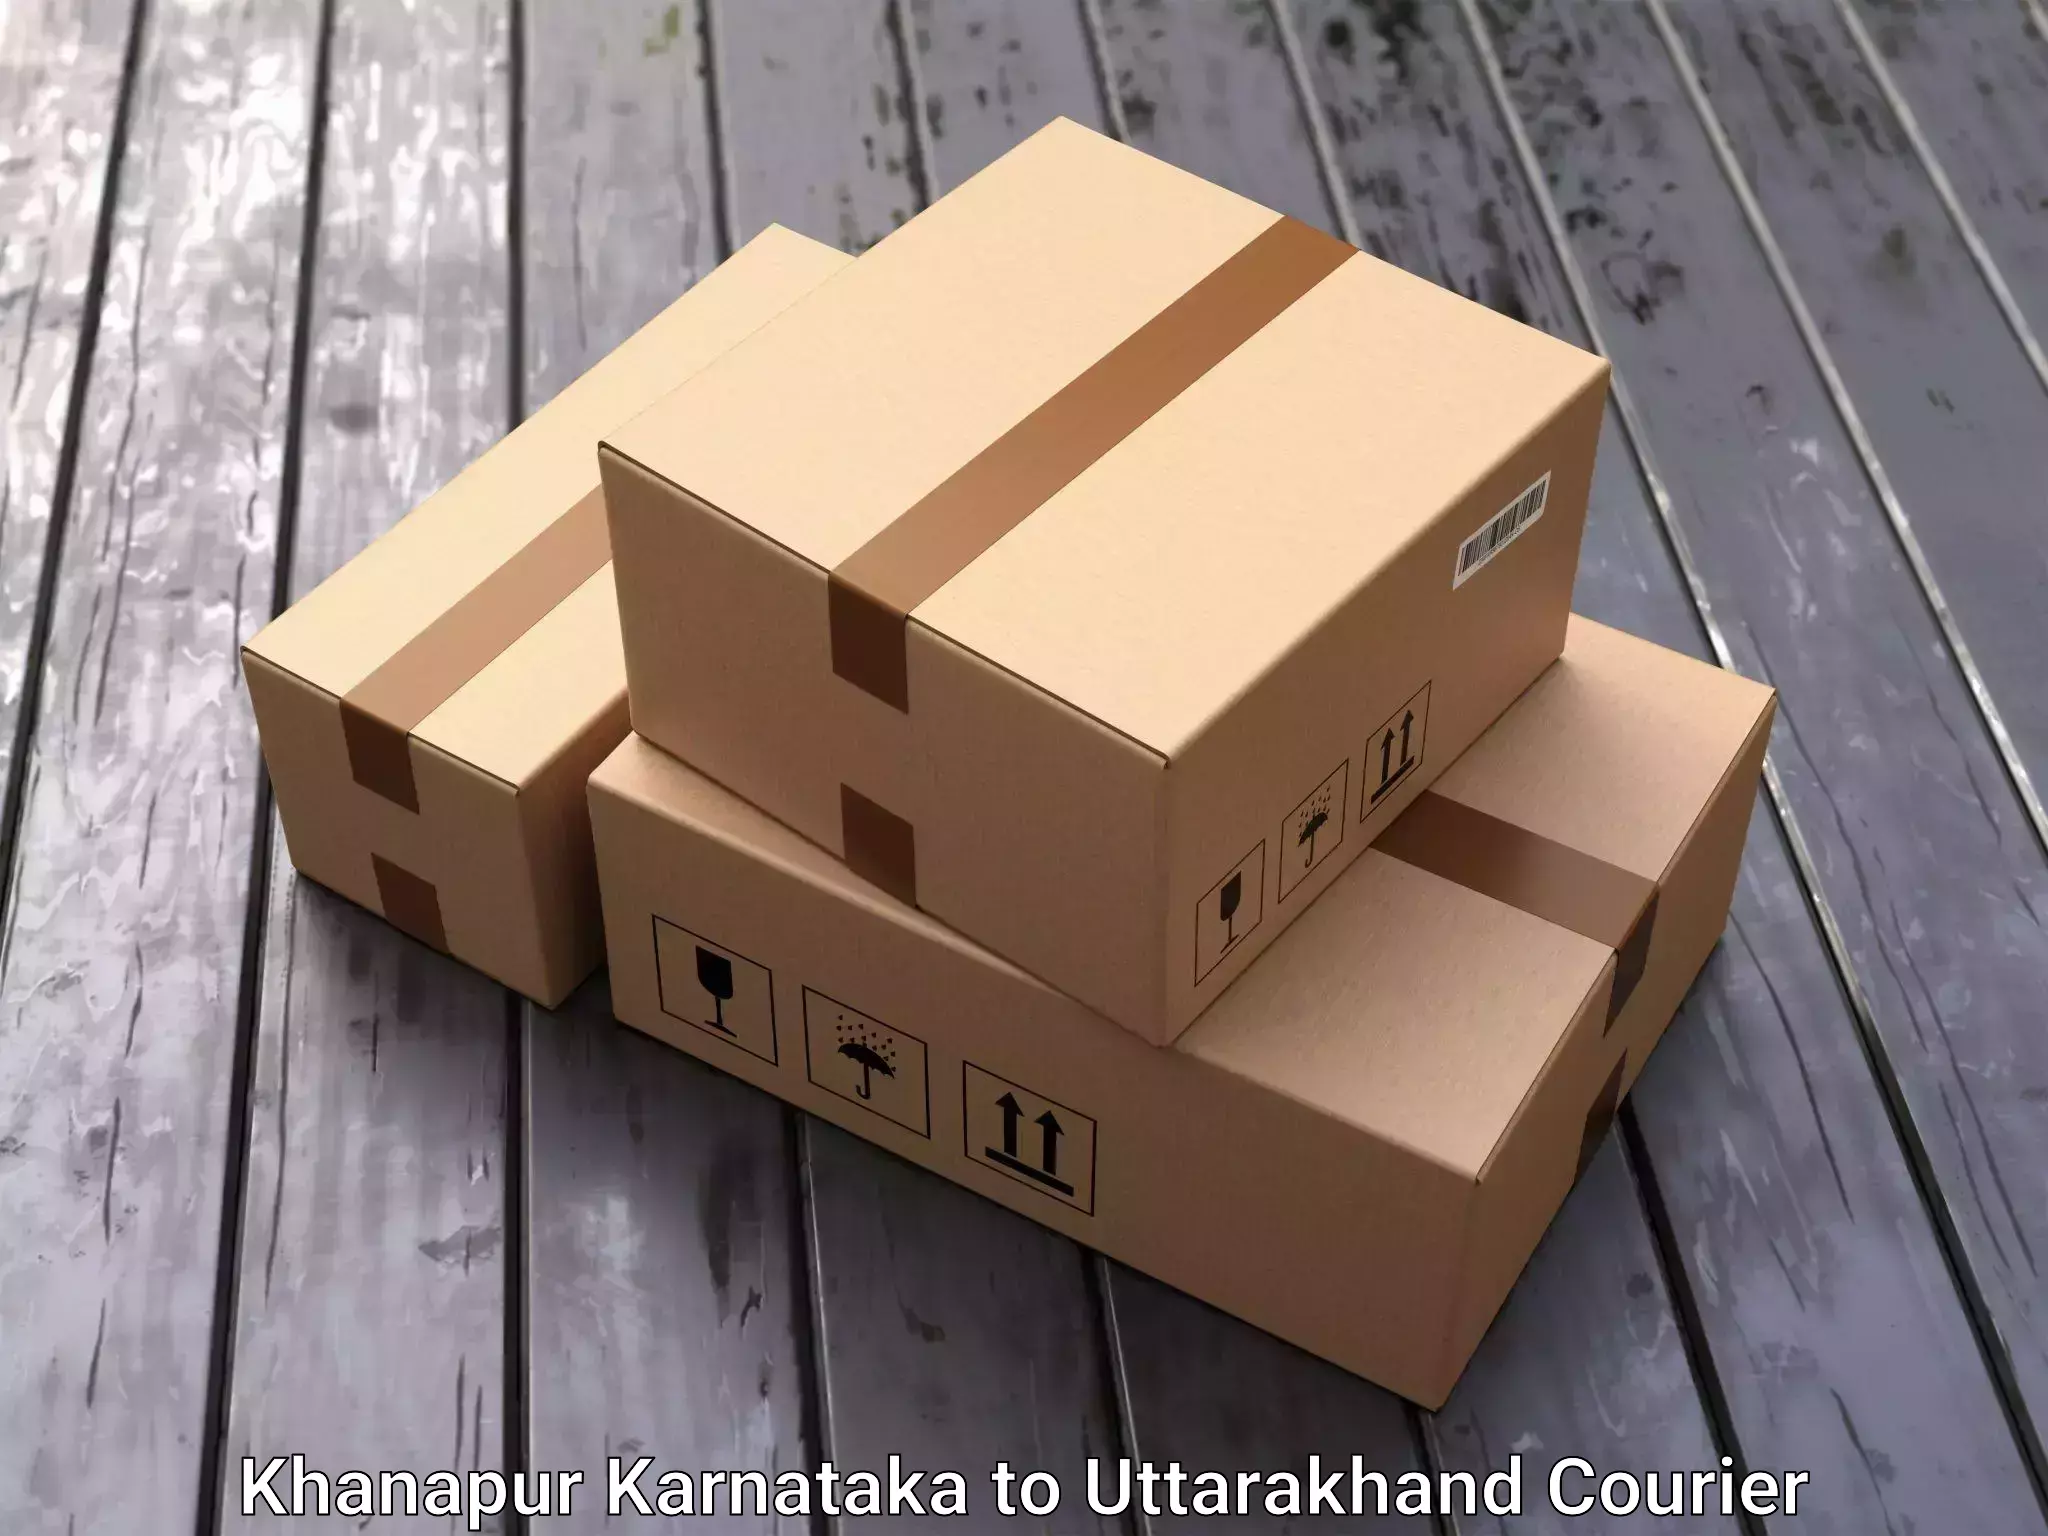 Household goods transporters Khanapur Karnataka to IIT Roorkee